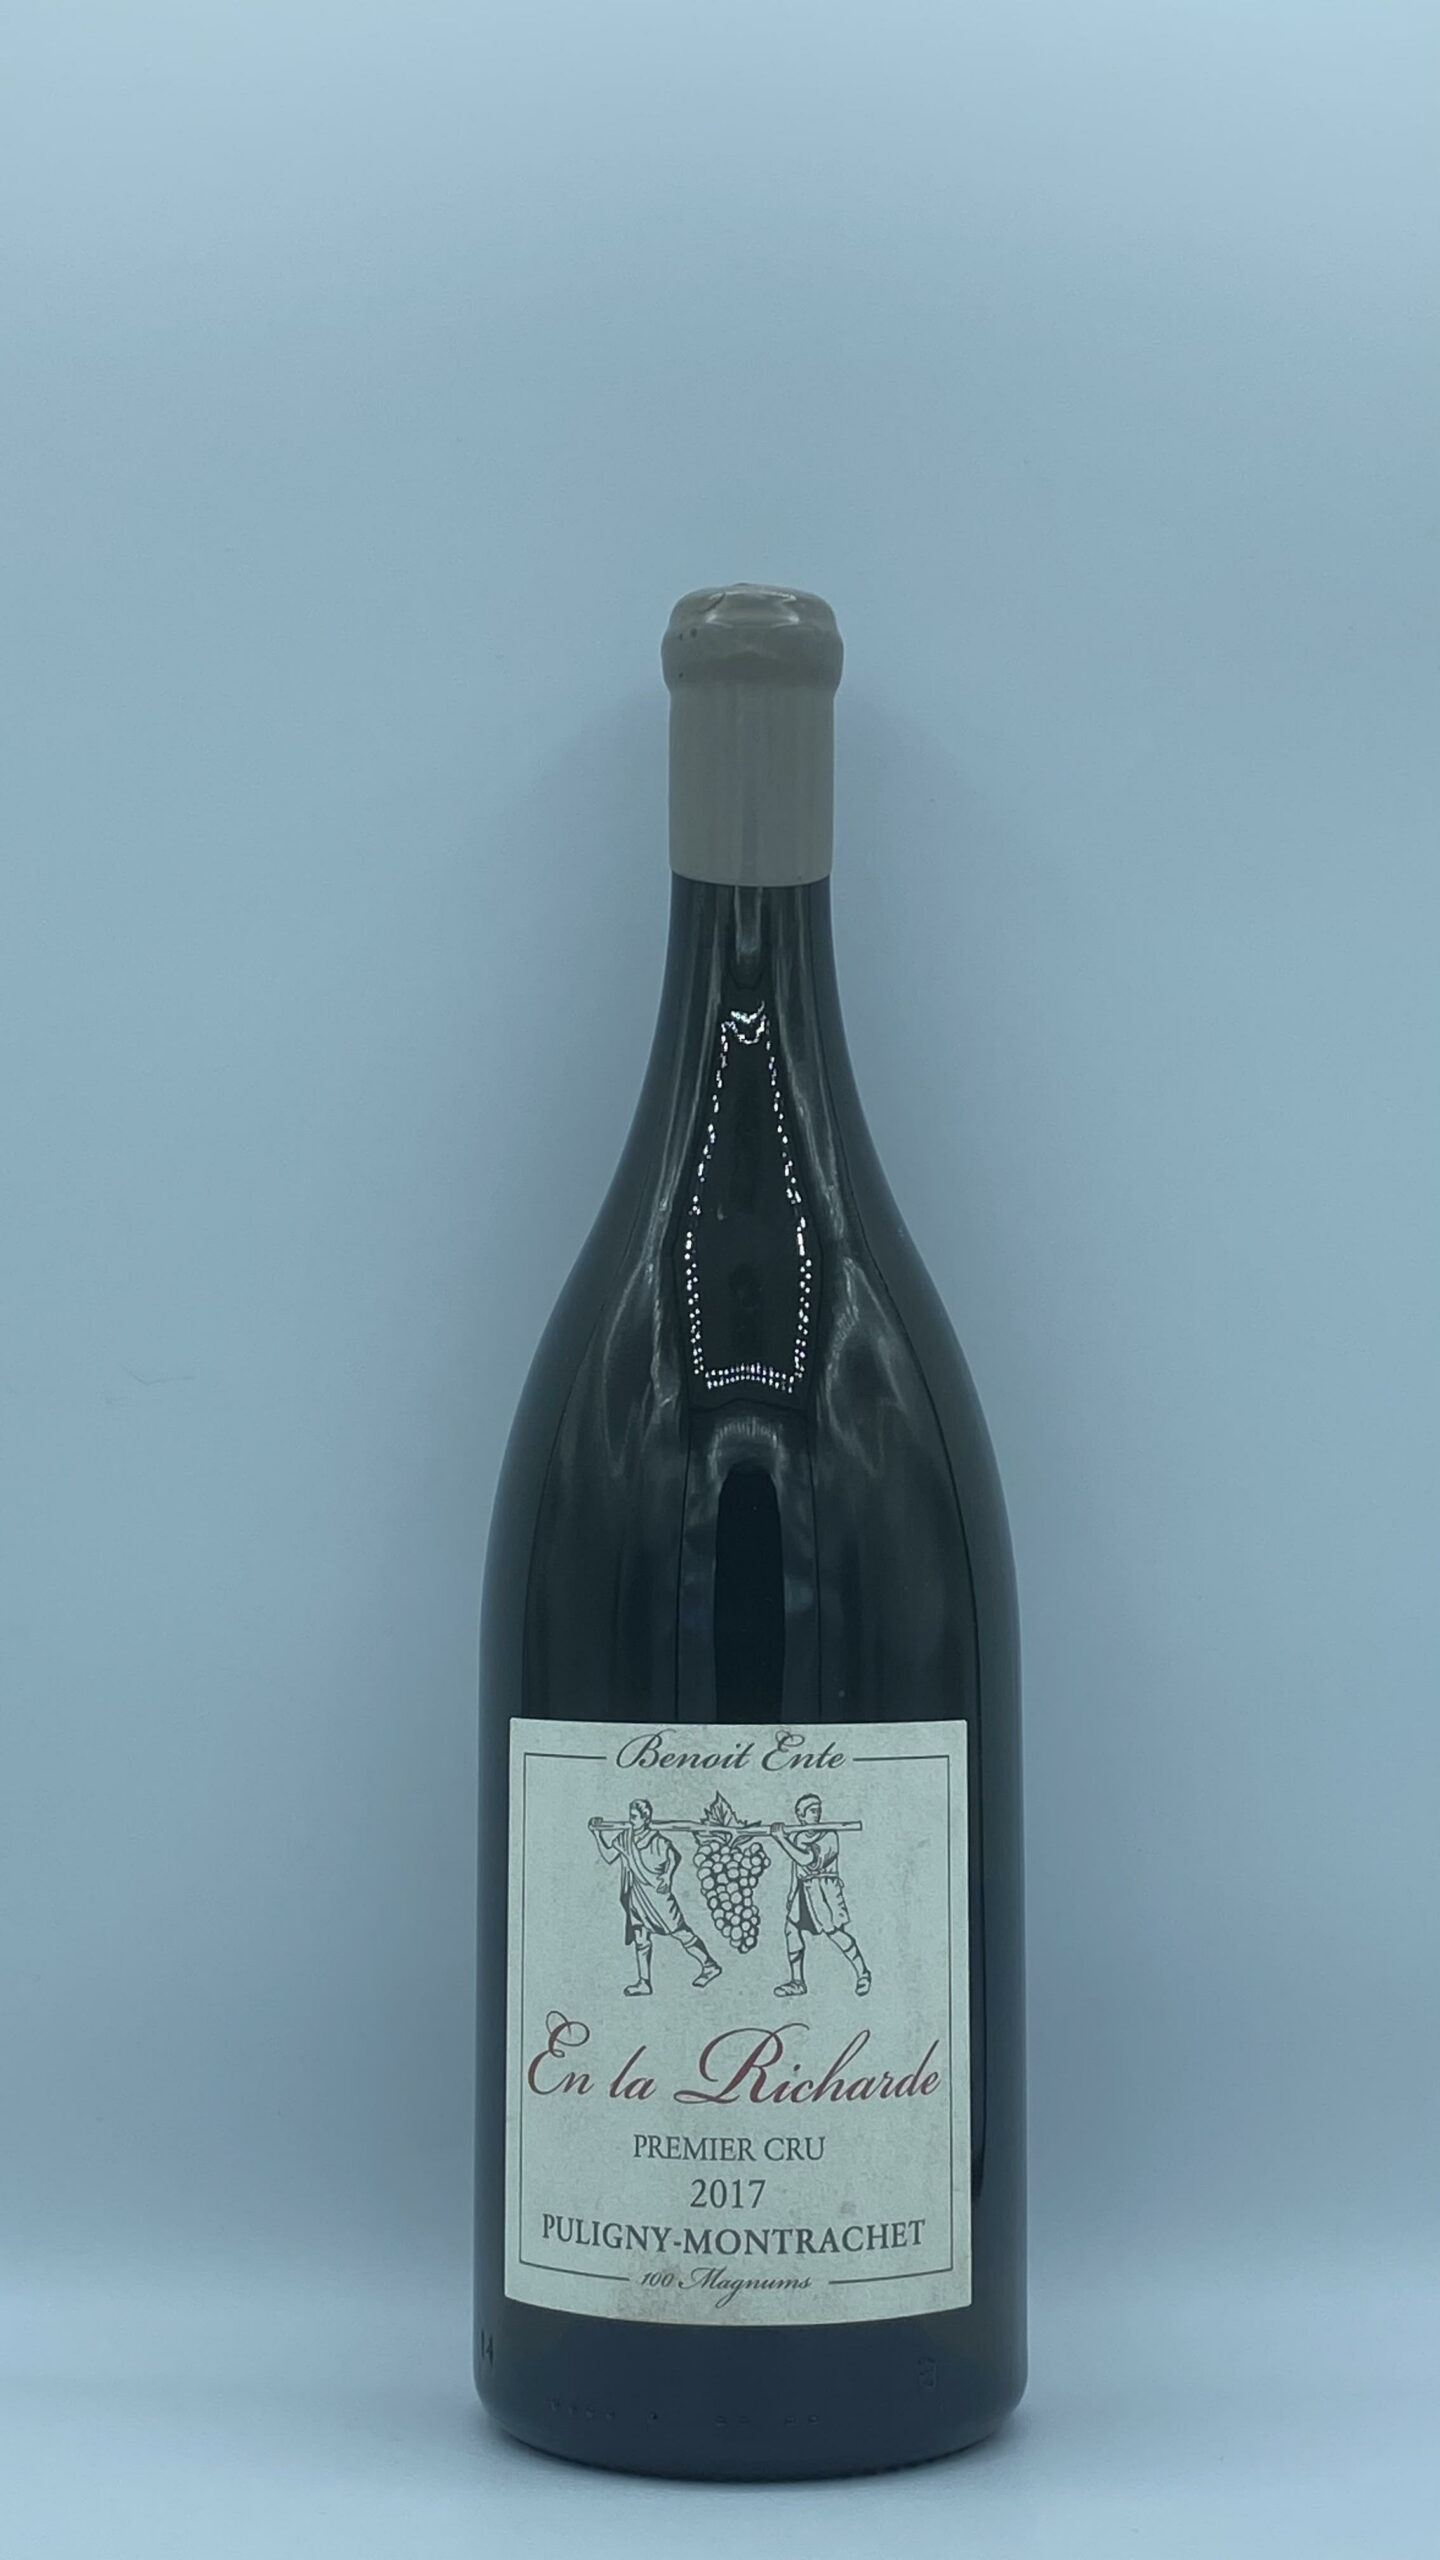 Bourgogne Magnum Puligny-Montrachet 1er cru “En la Richarde” 2017 Domaine Ente